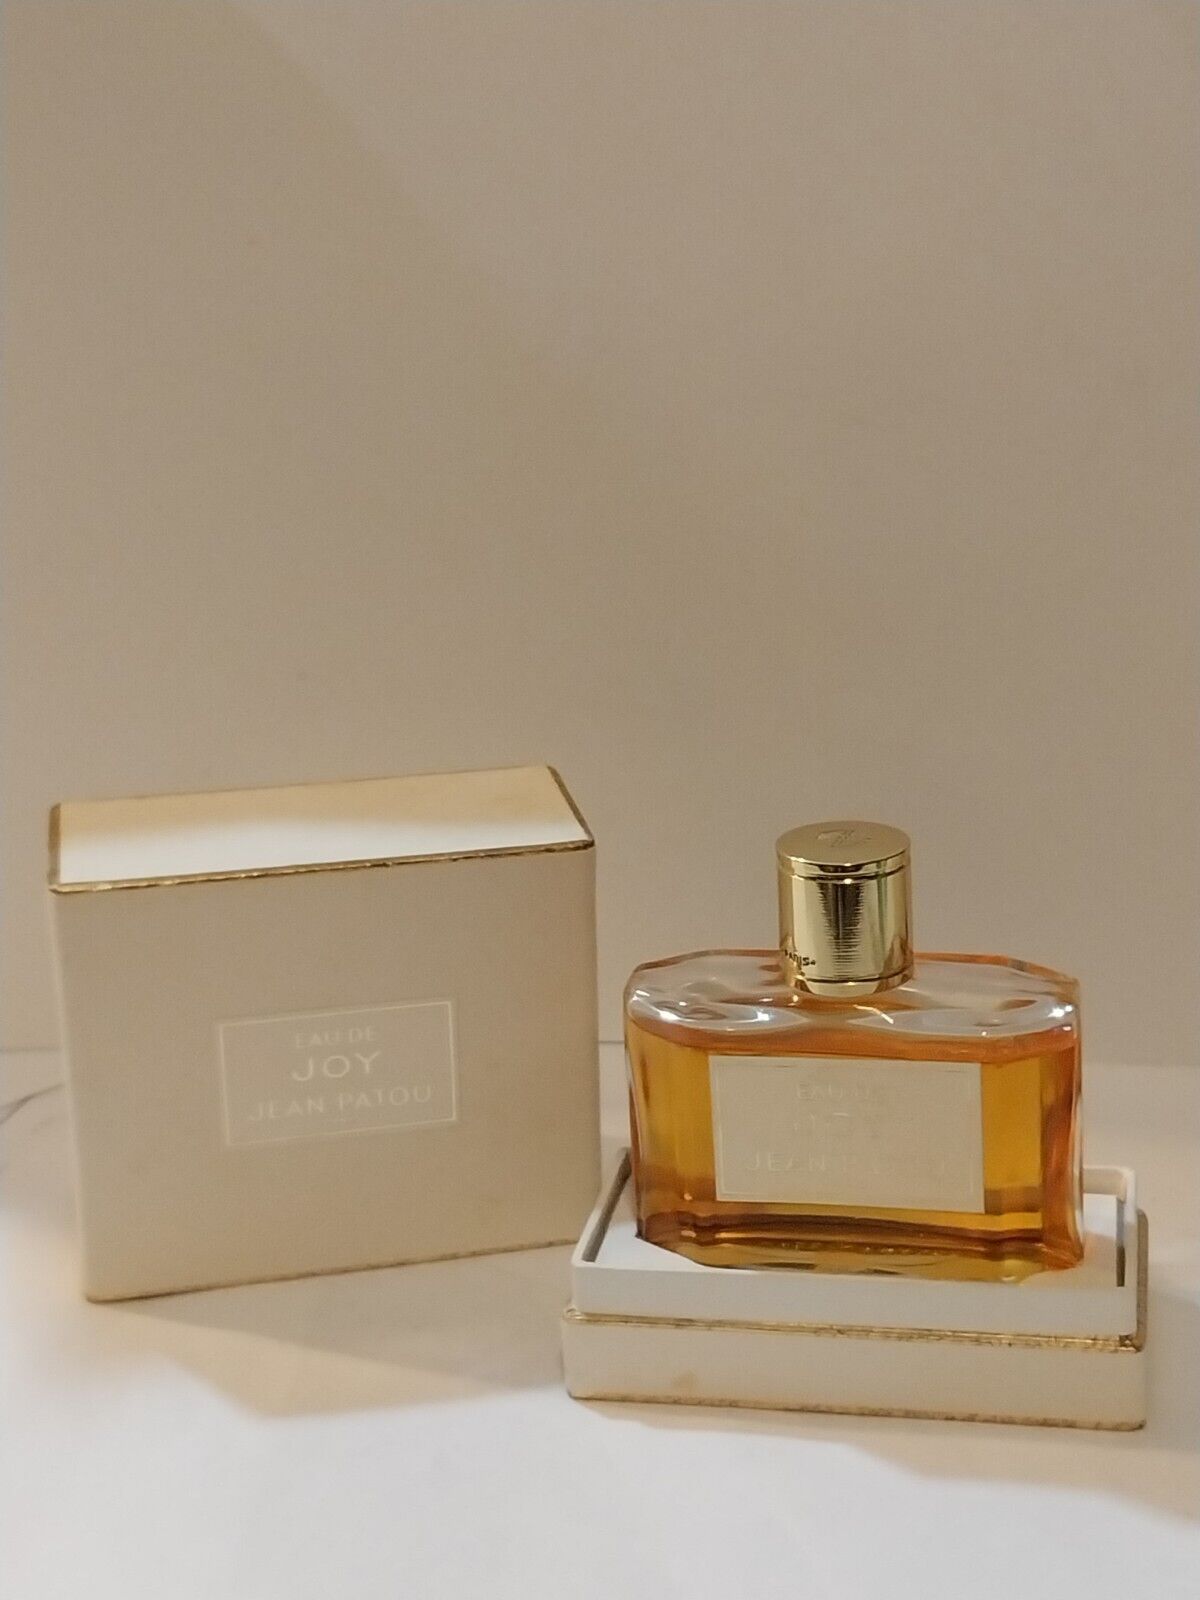 Vtg Eau de Joy Jean Patou Paris Perfume Splash 1 fl oz Original Box Ref: 1203